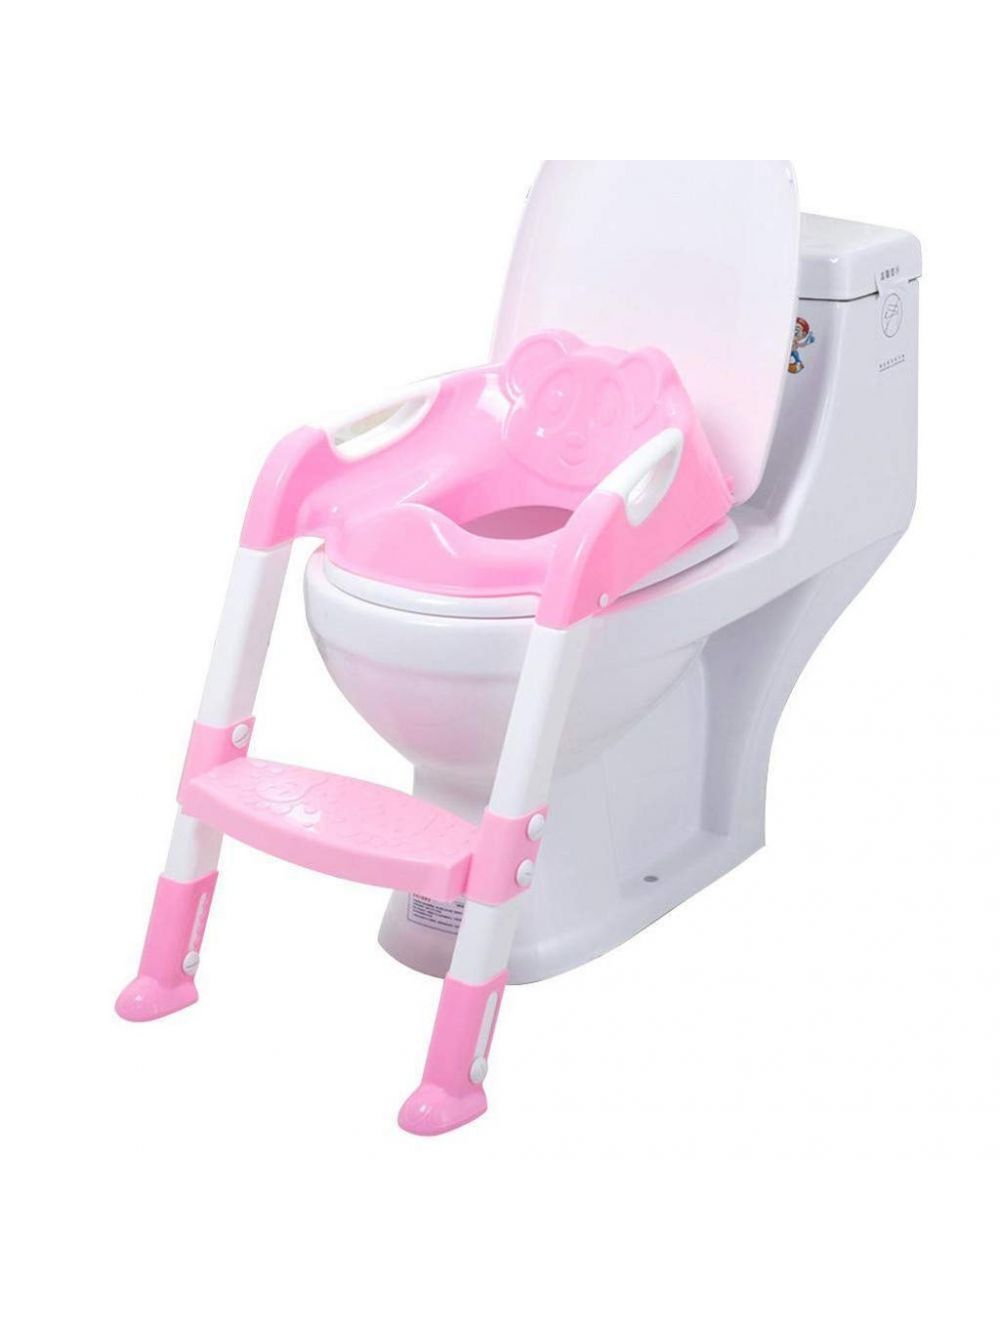 iBaby Kids Ladder Potty Seat Pink